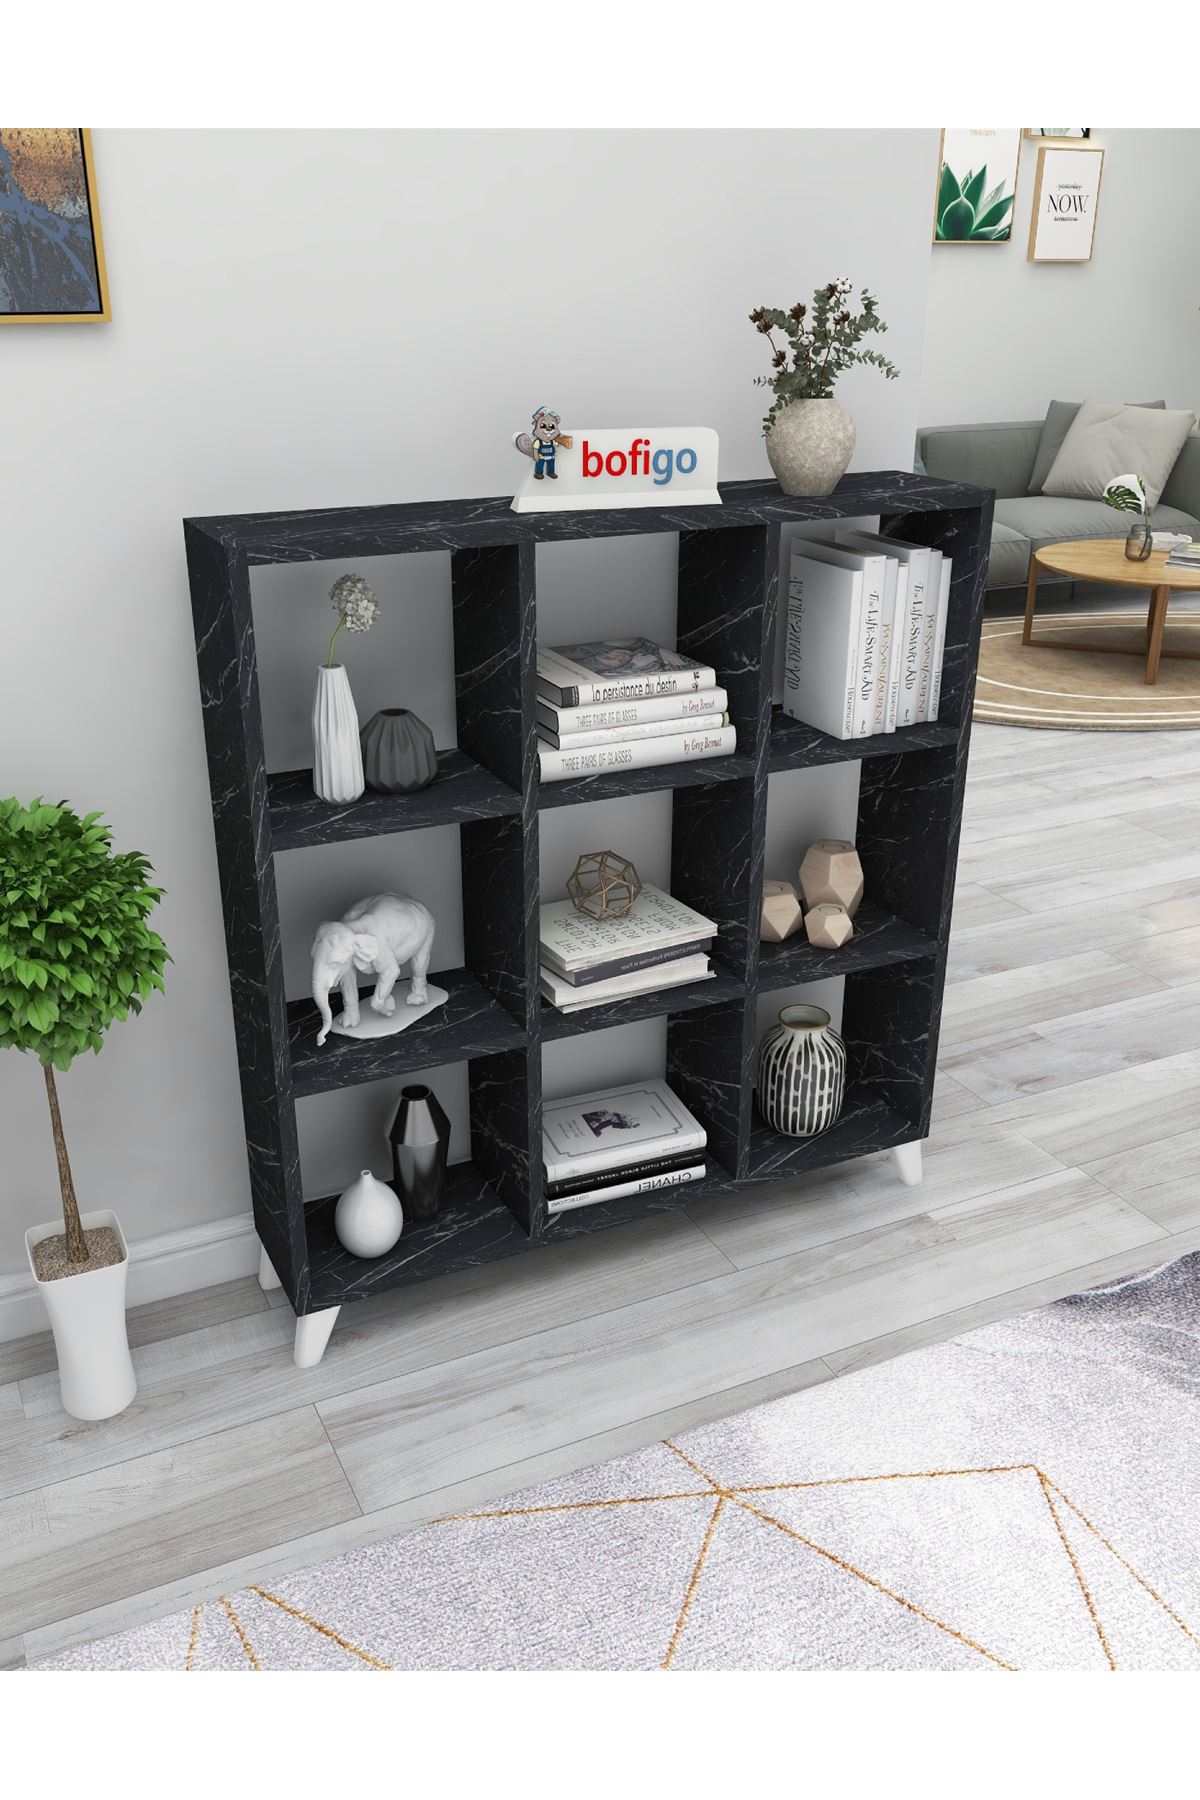 Bofigo Cube Bookshelf with 9 Sections and Shelves Square Bookcase Library Bendir